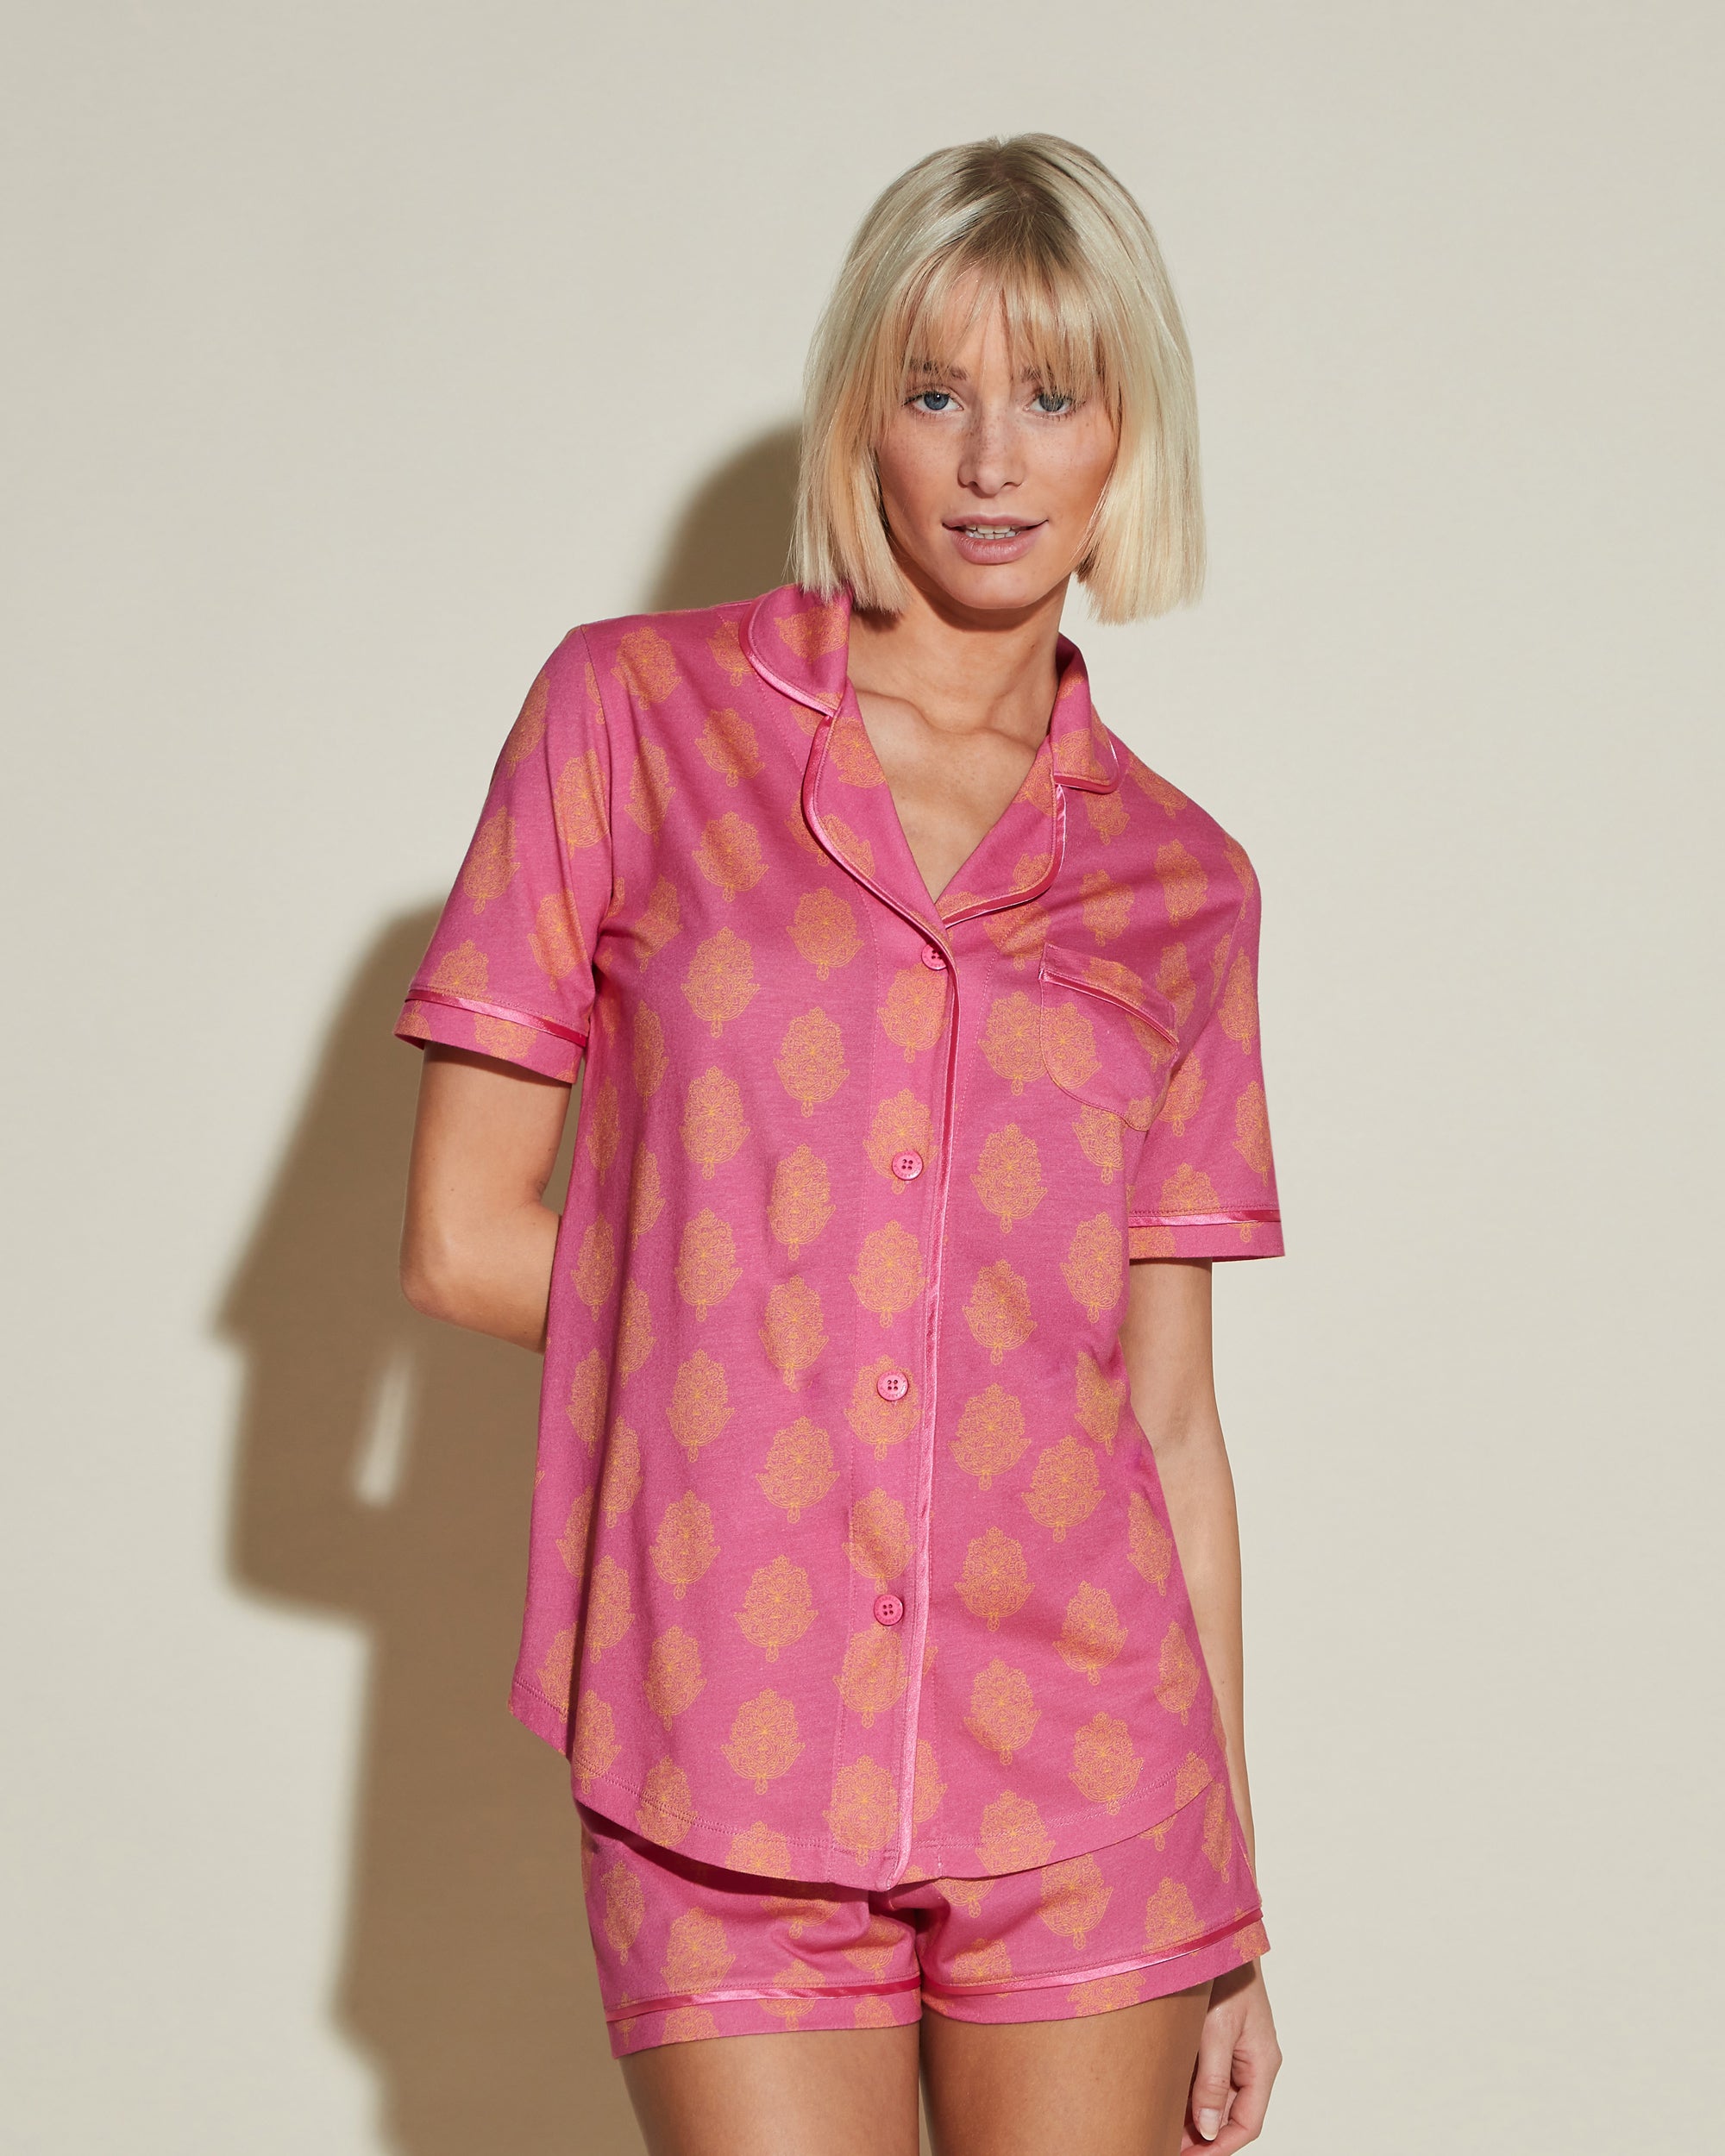 Cosabella, Bella Printed Short Sleeve Top & Boxer Pajama Set